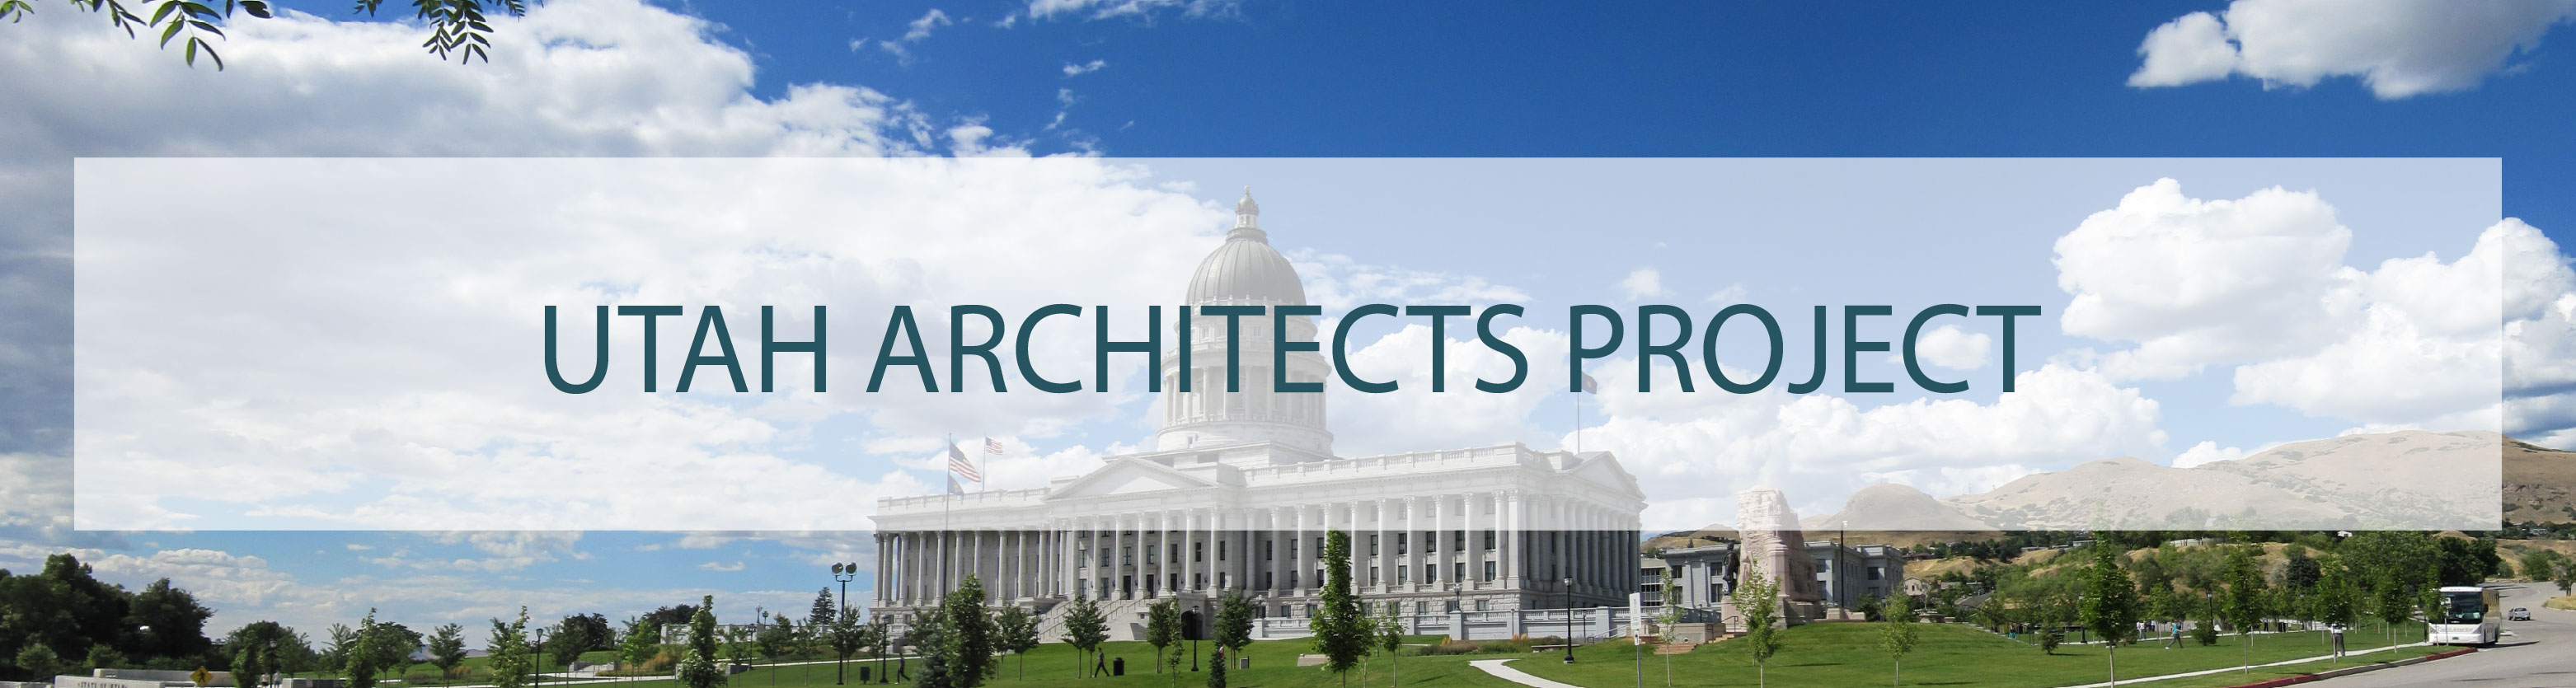 Utah Architects Project 